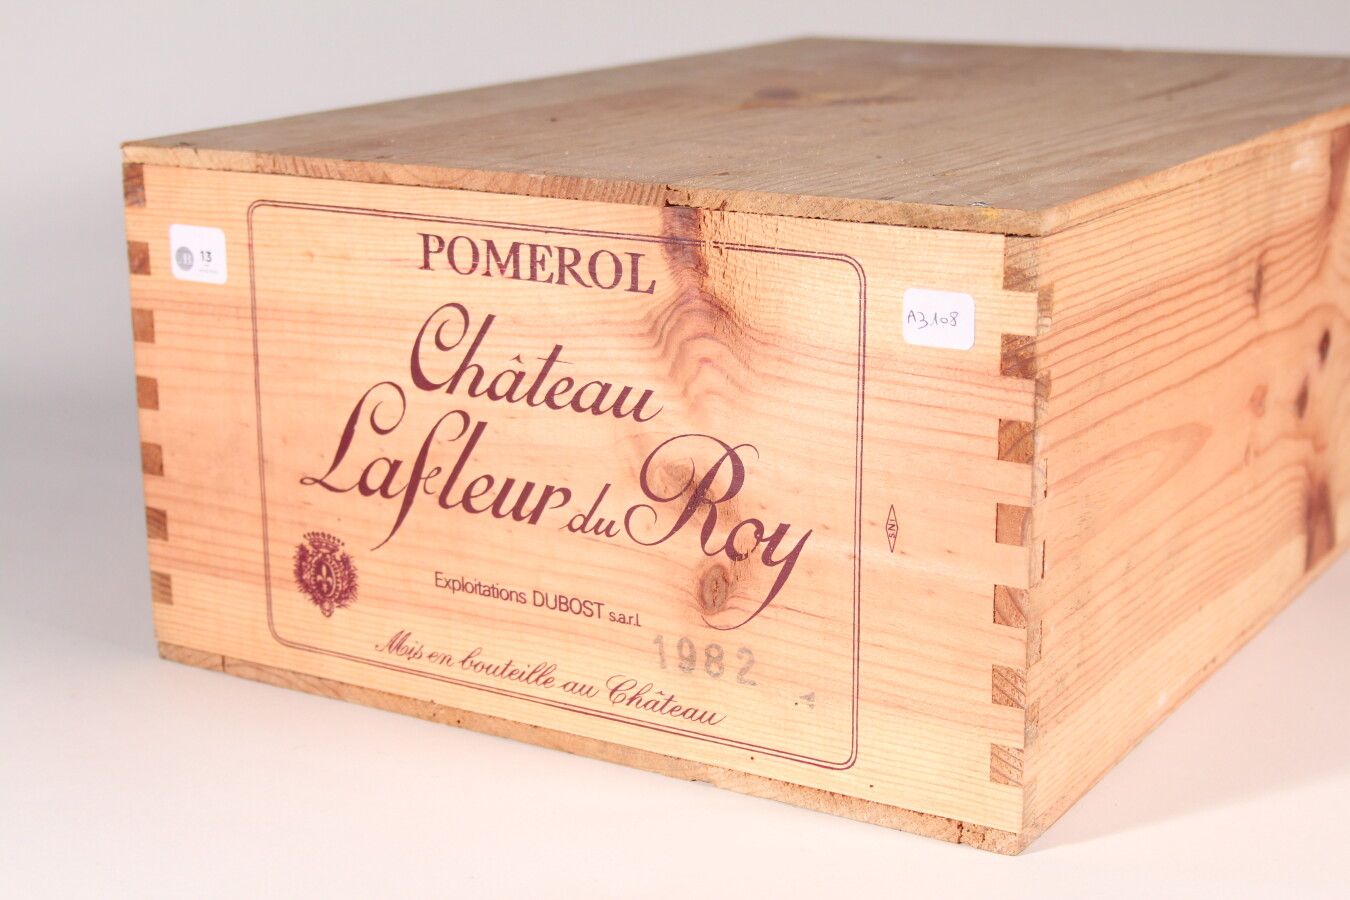 Null 1982 - Château La Fleur du Roy

Red Pomerol - 12 bottles CBO